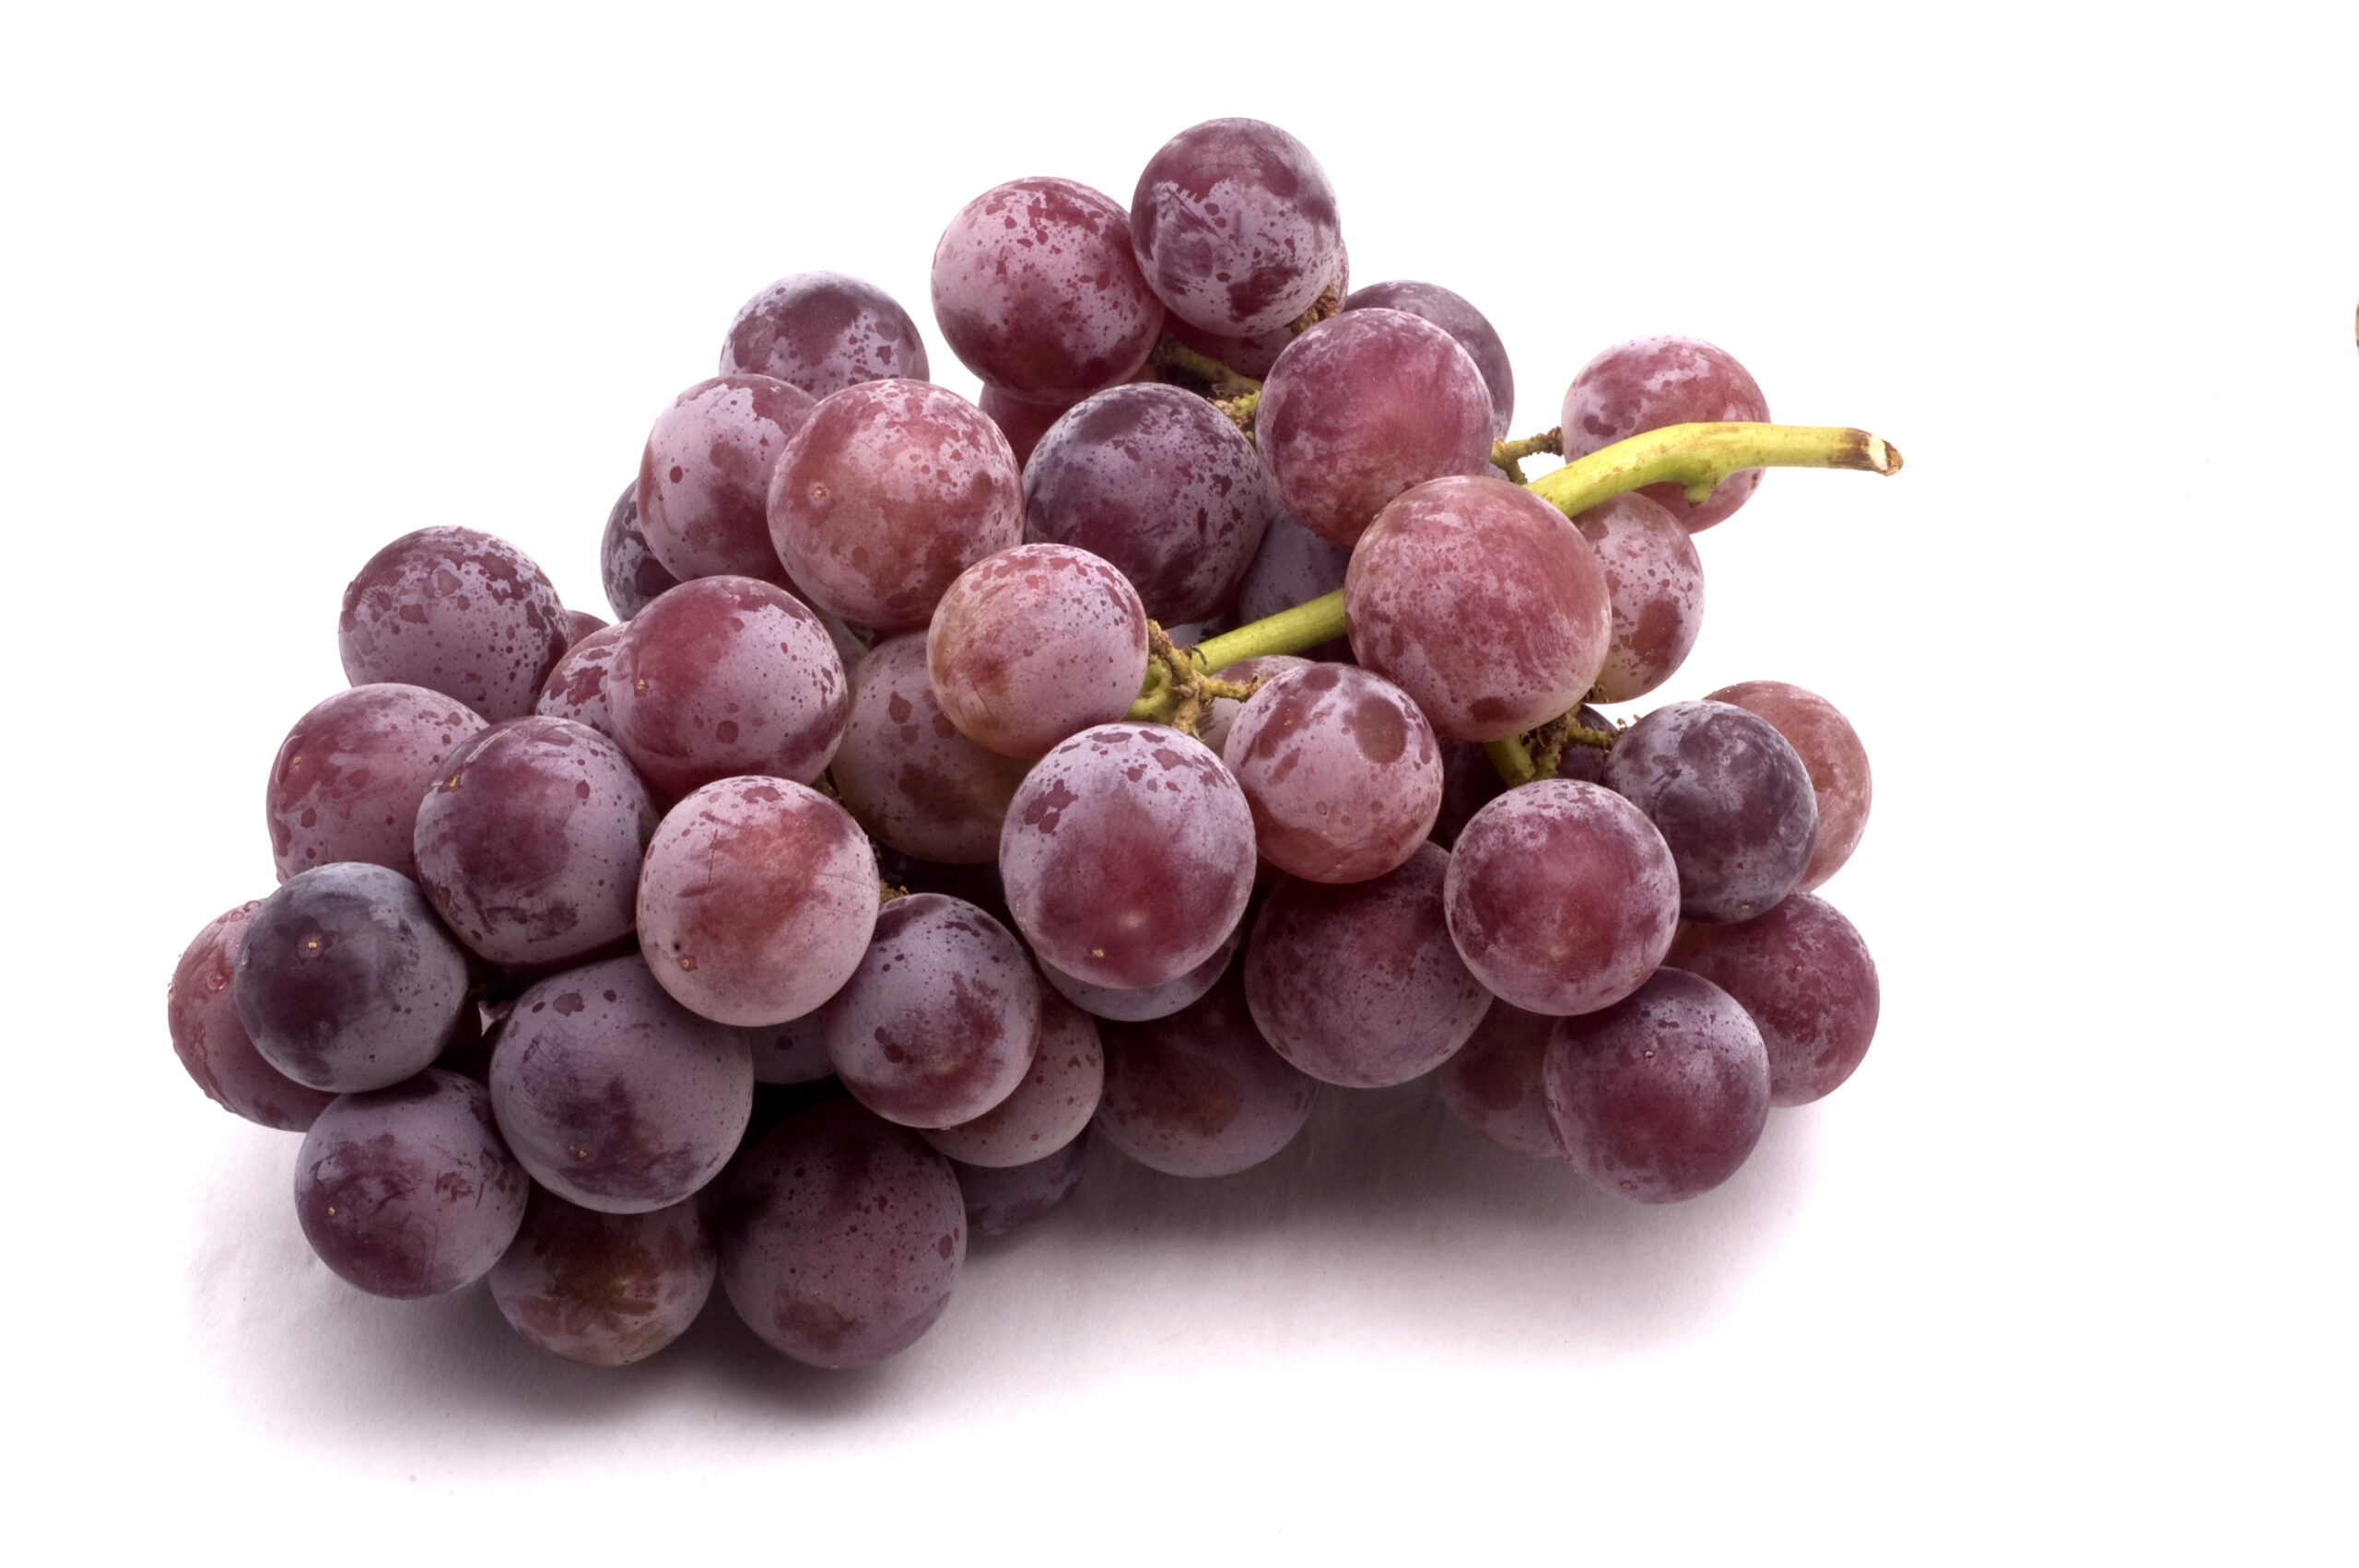 An image of slip skin grapes.